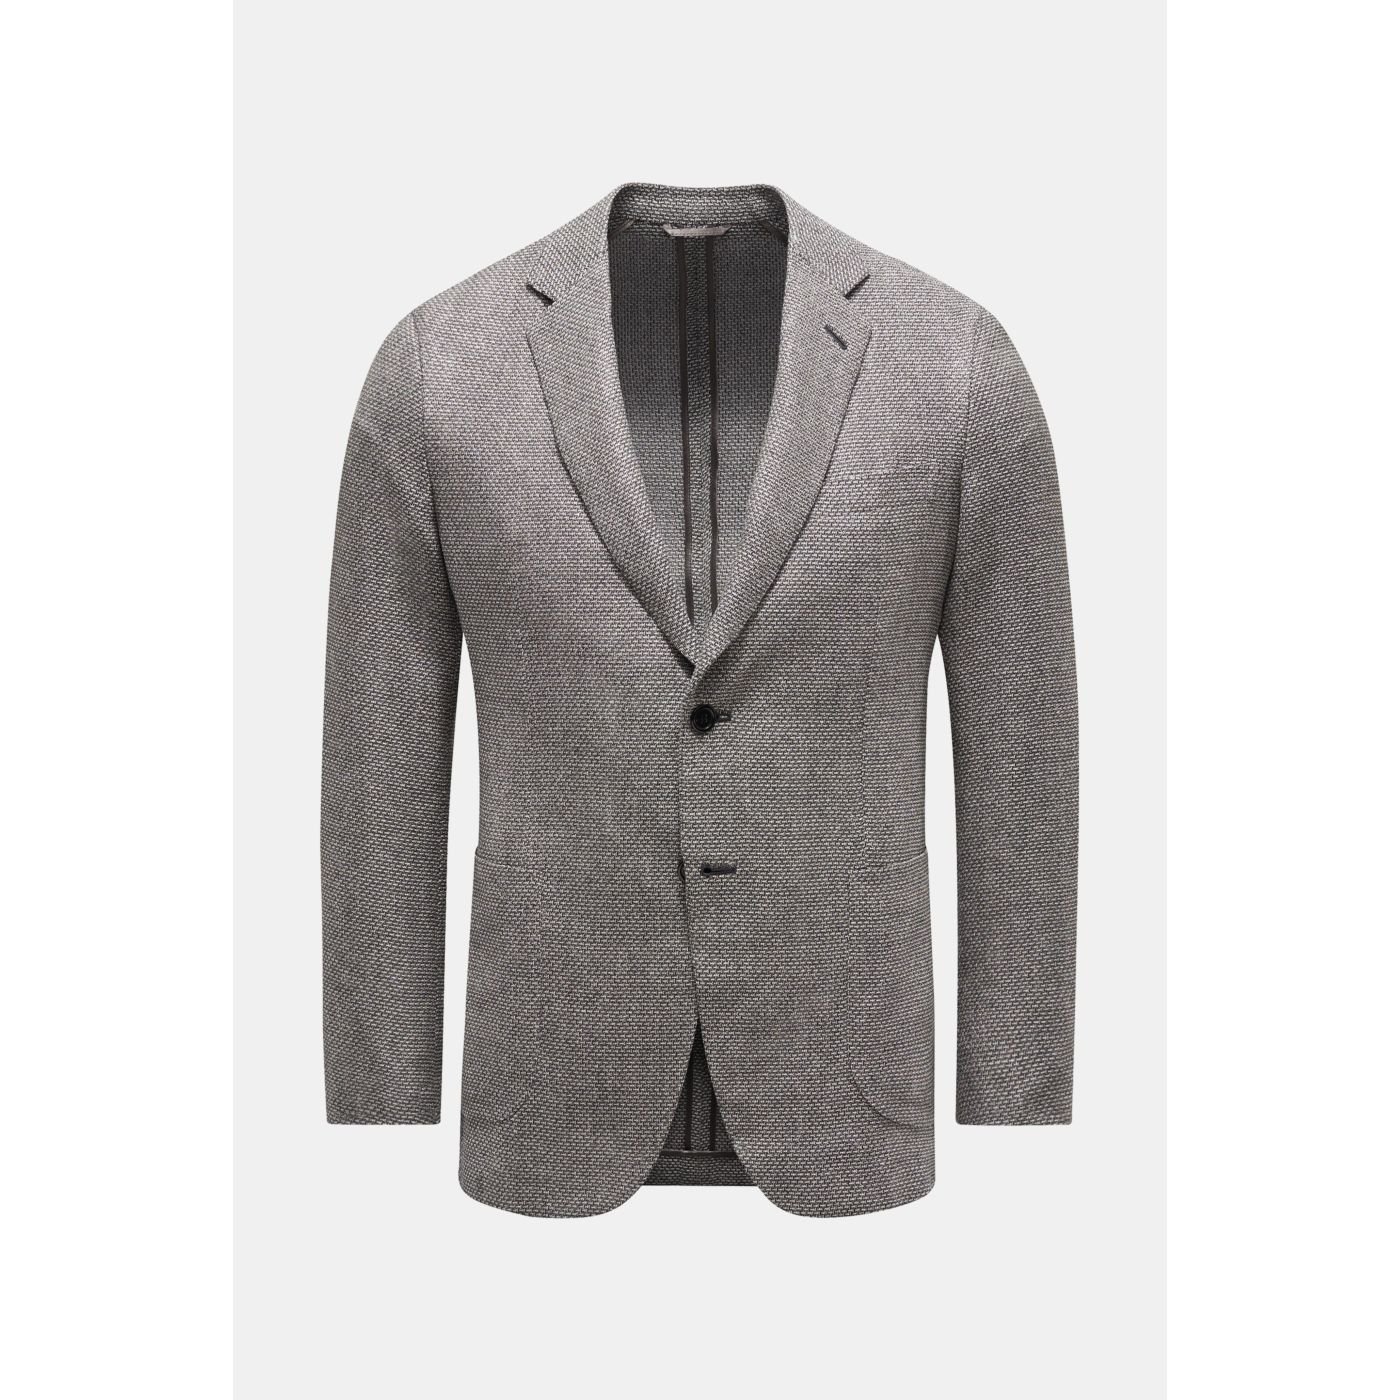 BRIONI cashmere jacket 'Plume' grey/off-white | BRAUN Hamburg